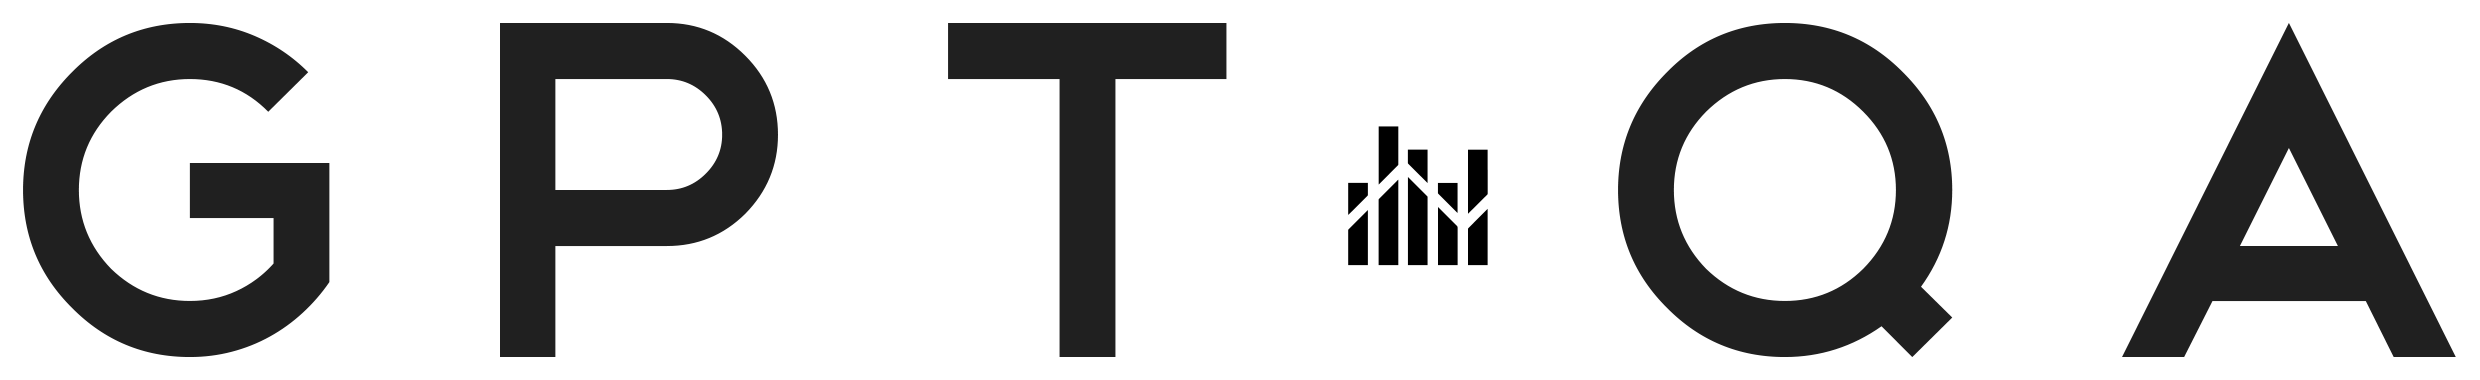 GPTQA Logo for validity